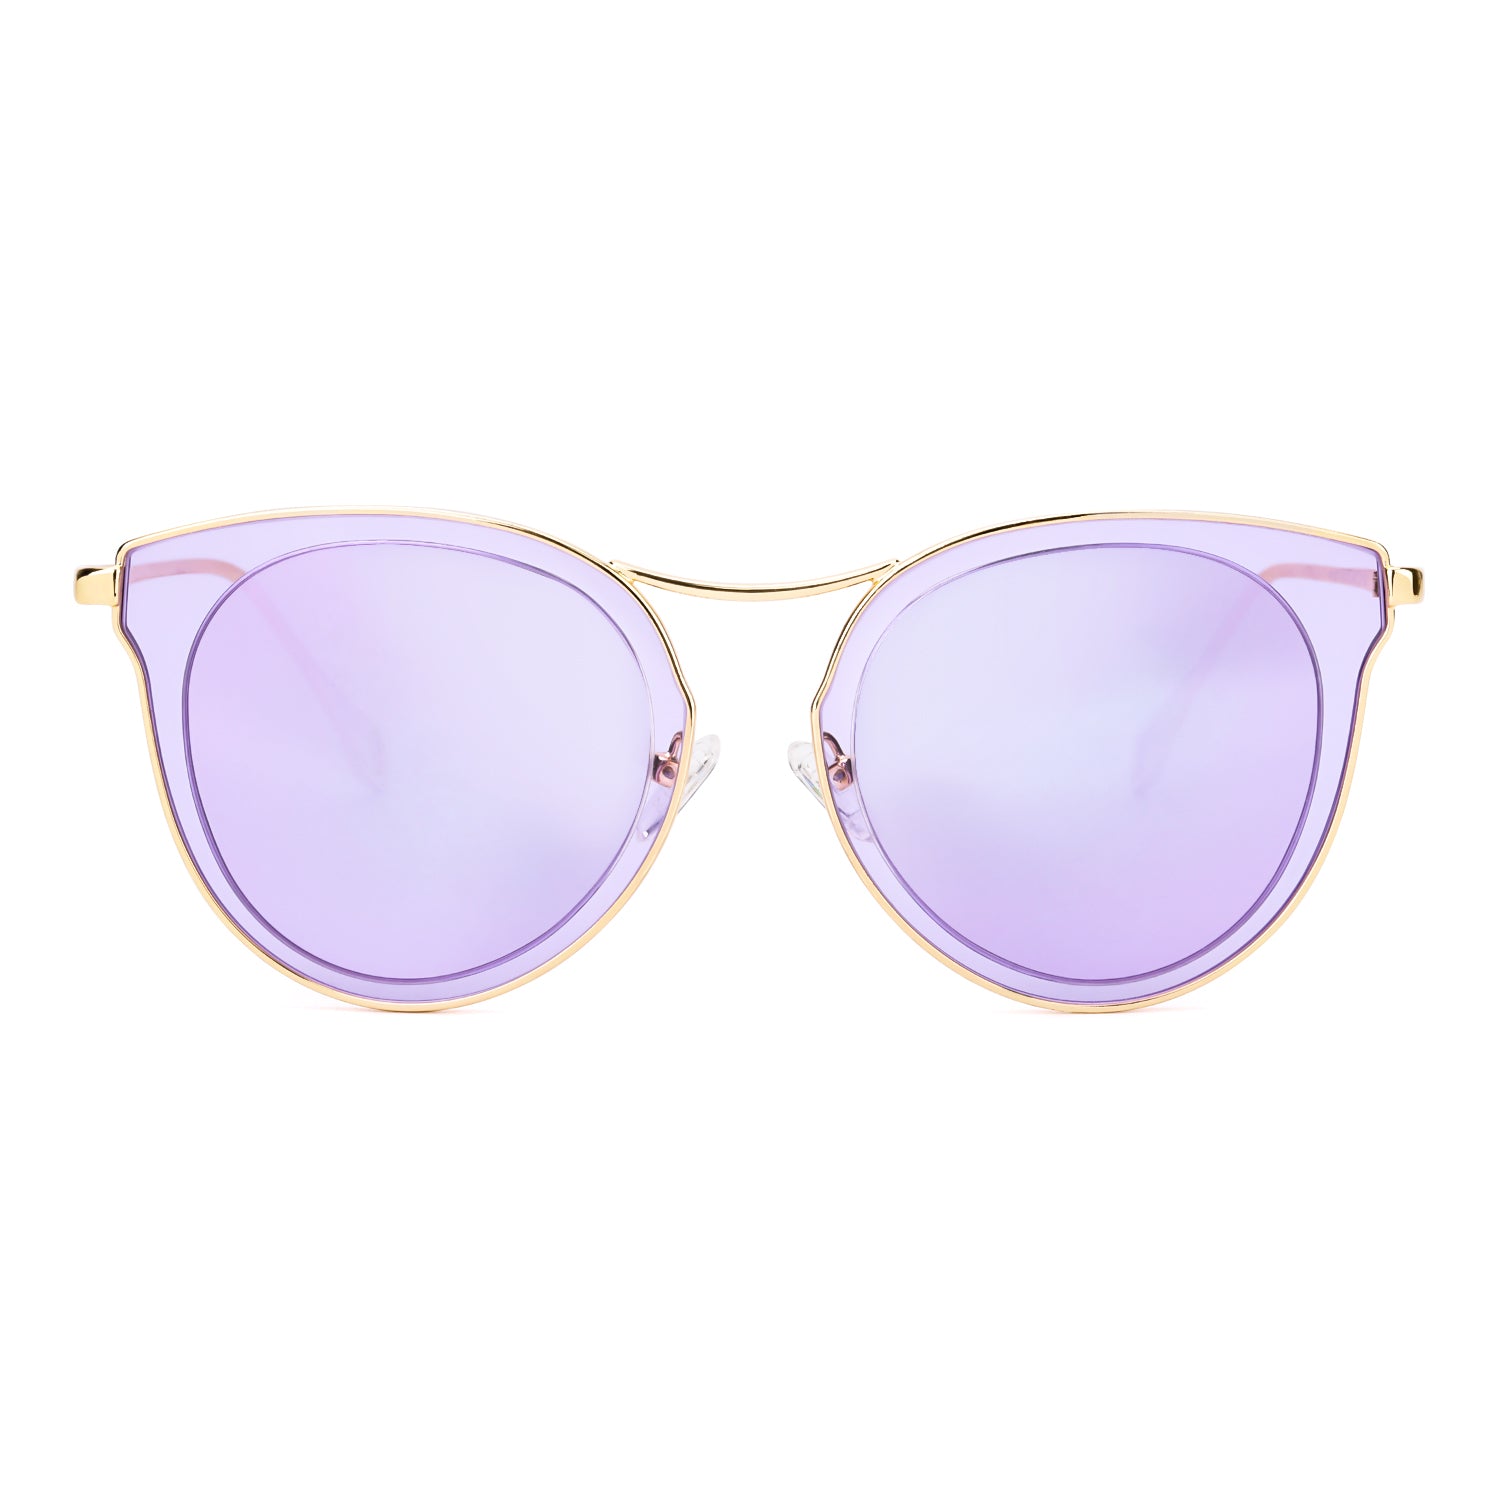 LVIOE Women's Cat Eye Polarized Sunglasses with UV400 Protection, Black